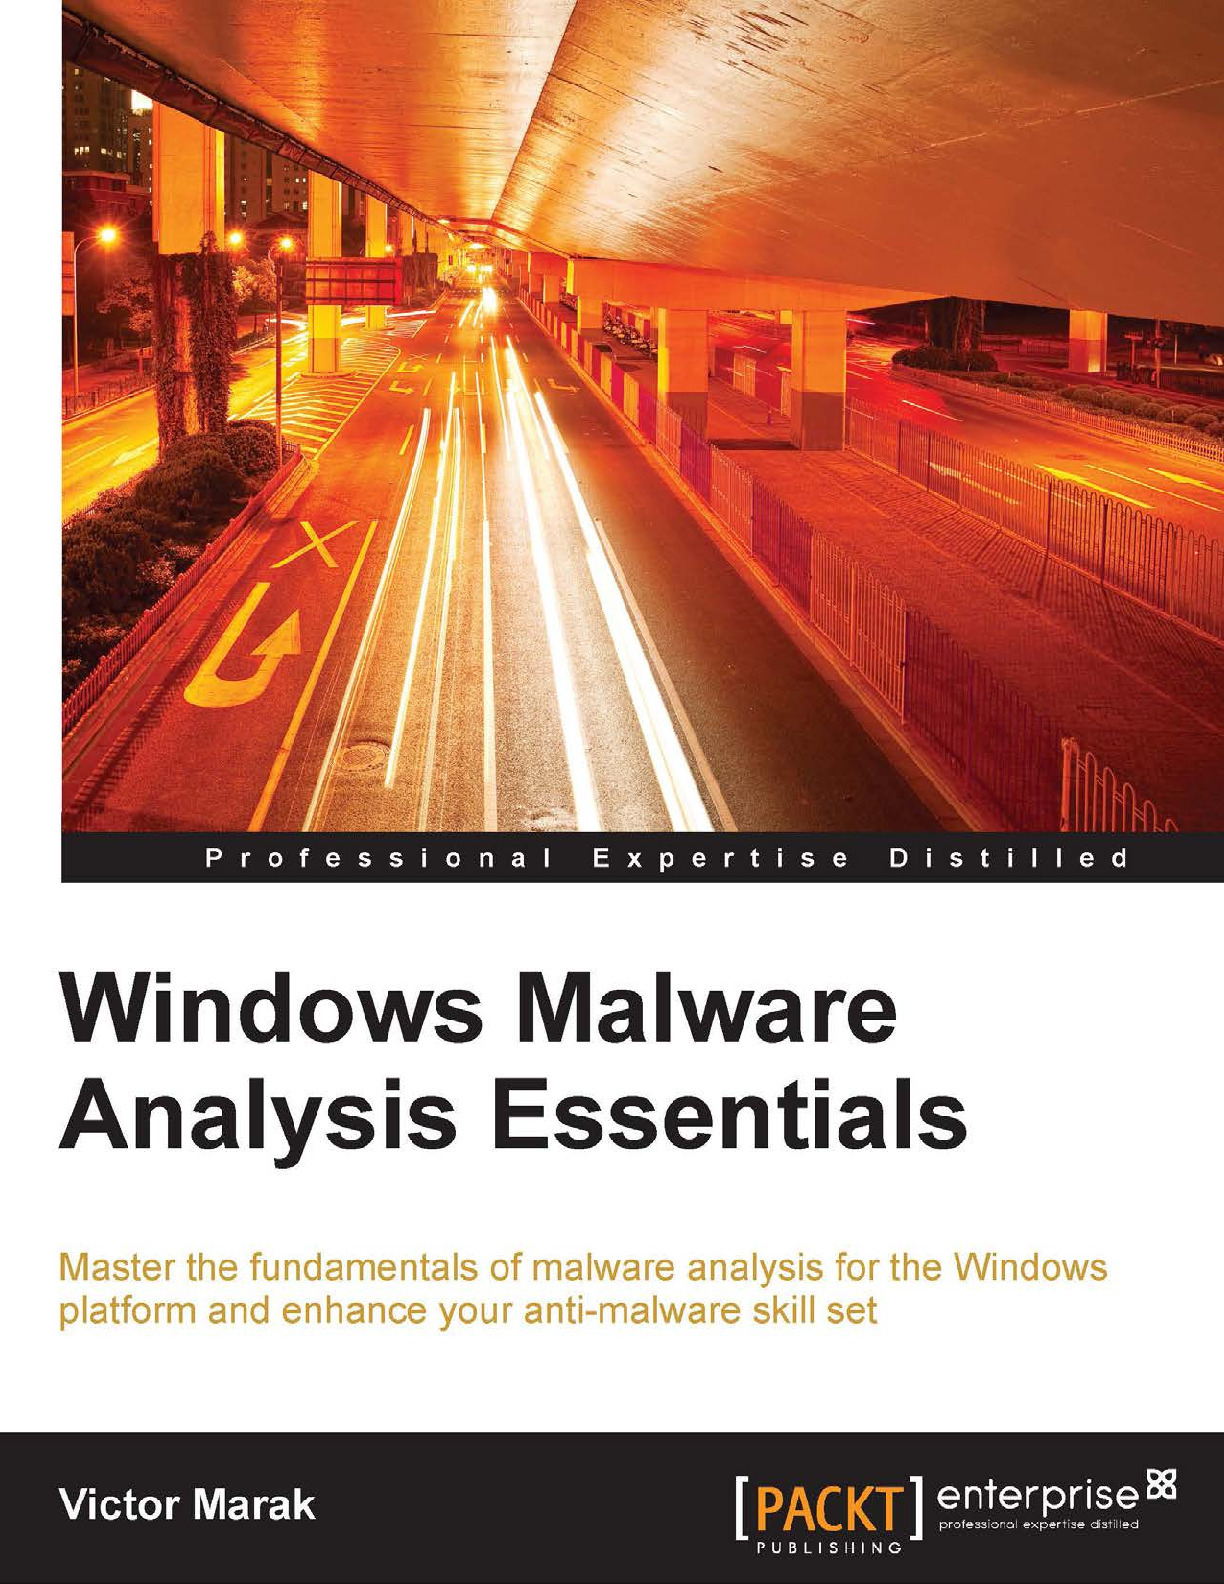 Windows Malware Analysis Essentials True PDF {PRG} 2015